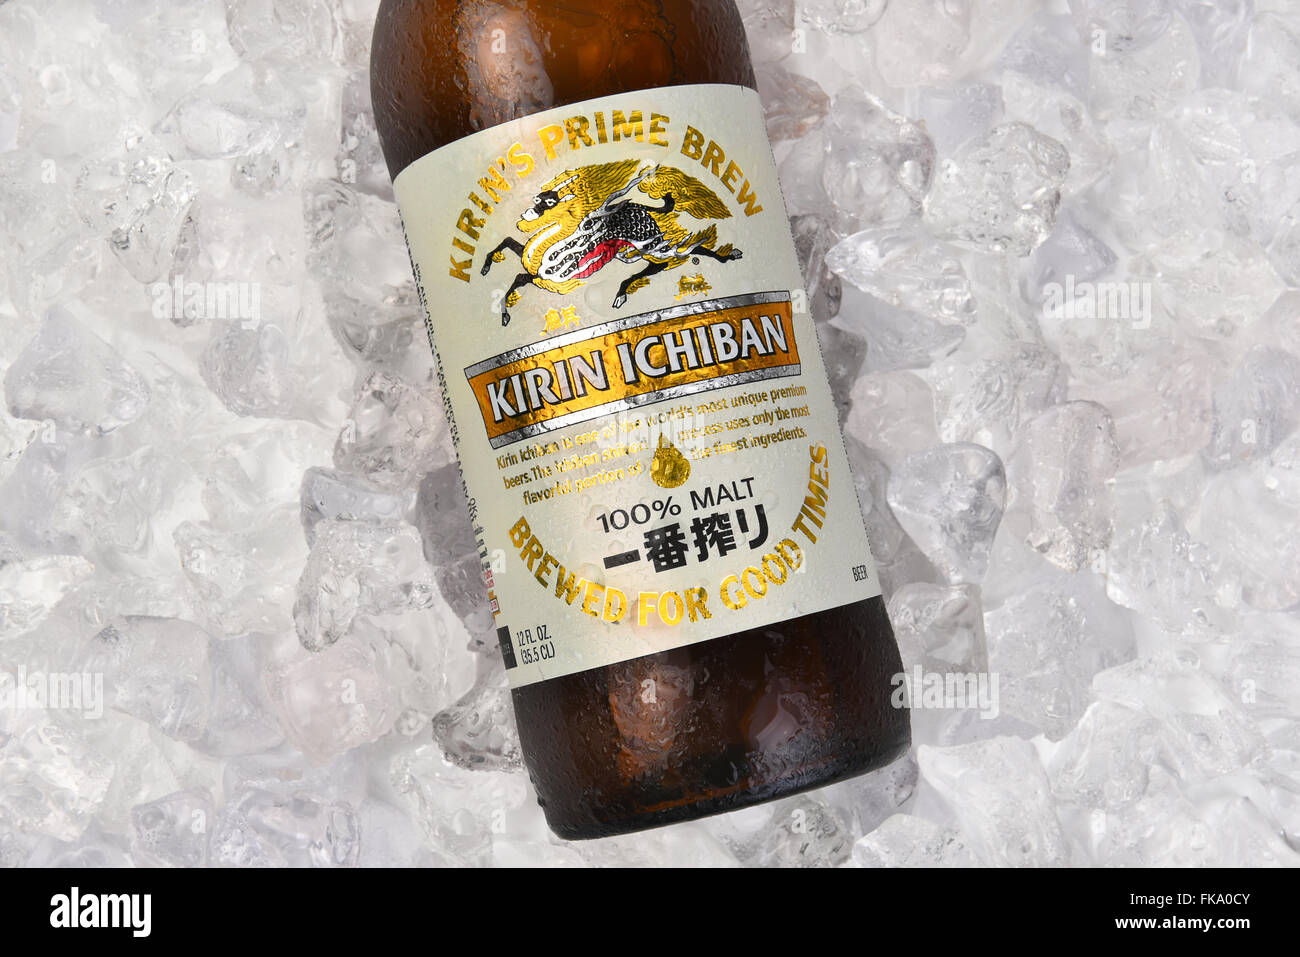 Kirin Ichiban Bottle on a bed of ice, Horizontal format closeup of hte label. Stock Photo